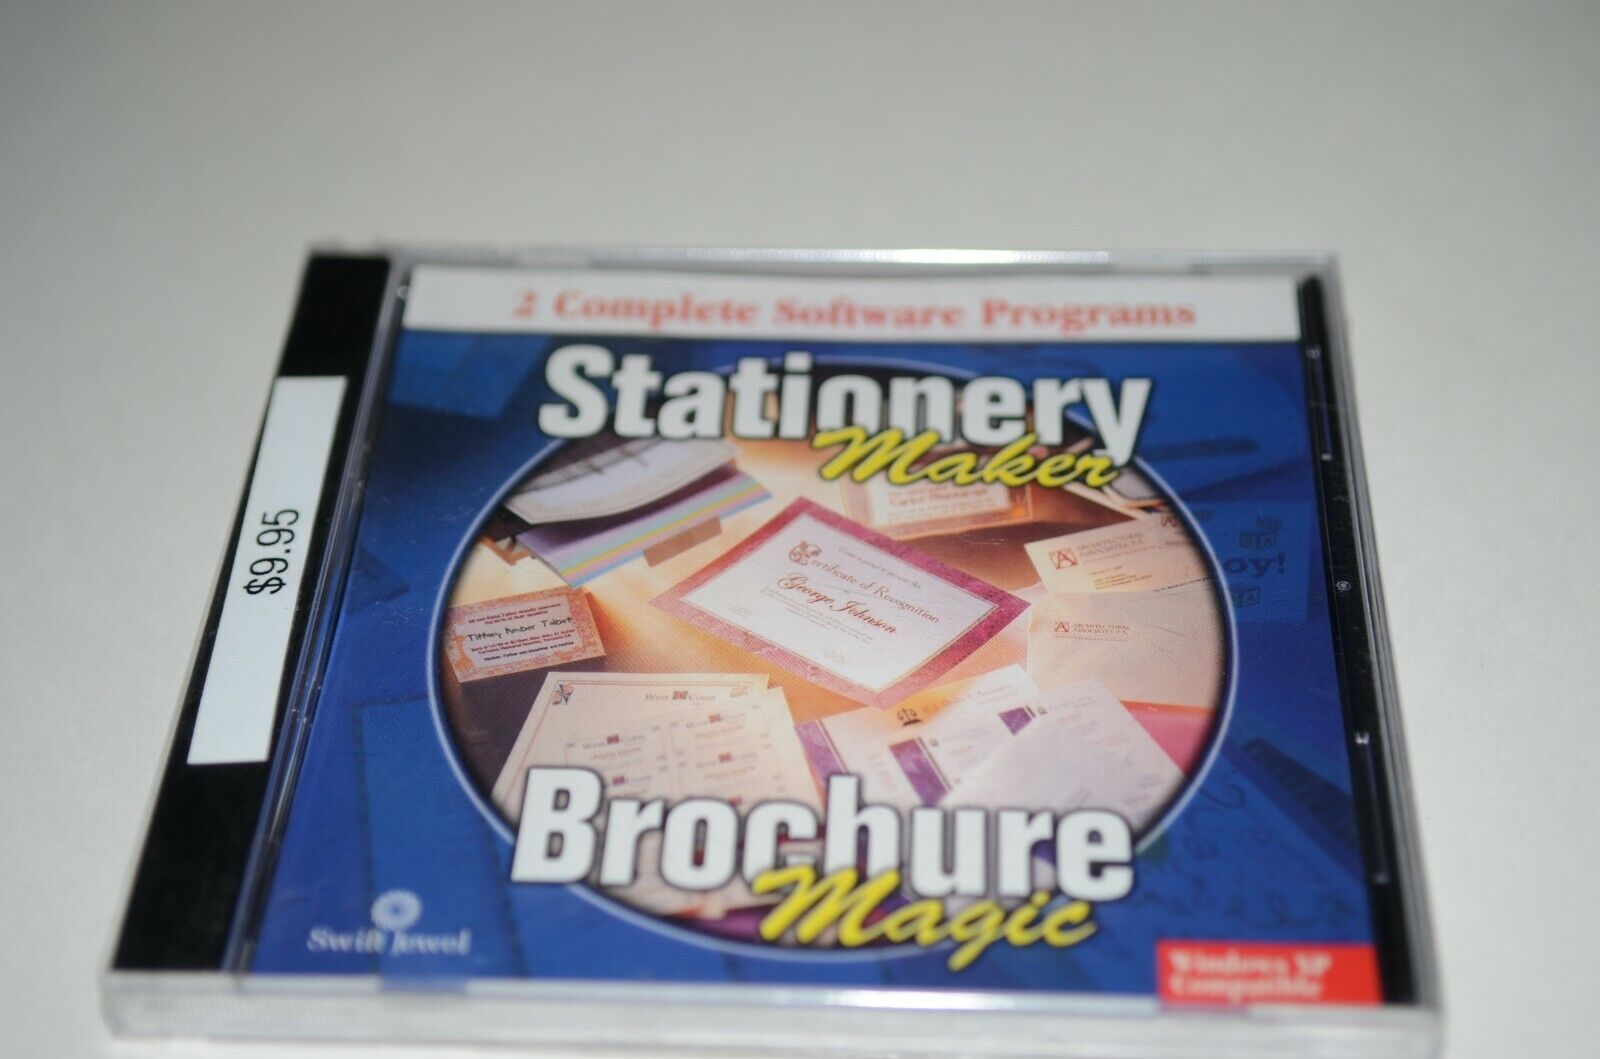 Swift Jewel Stationery Maker Brochure Magic PC CD-ROM Software